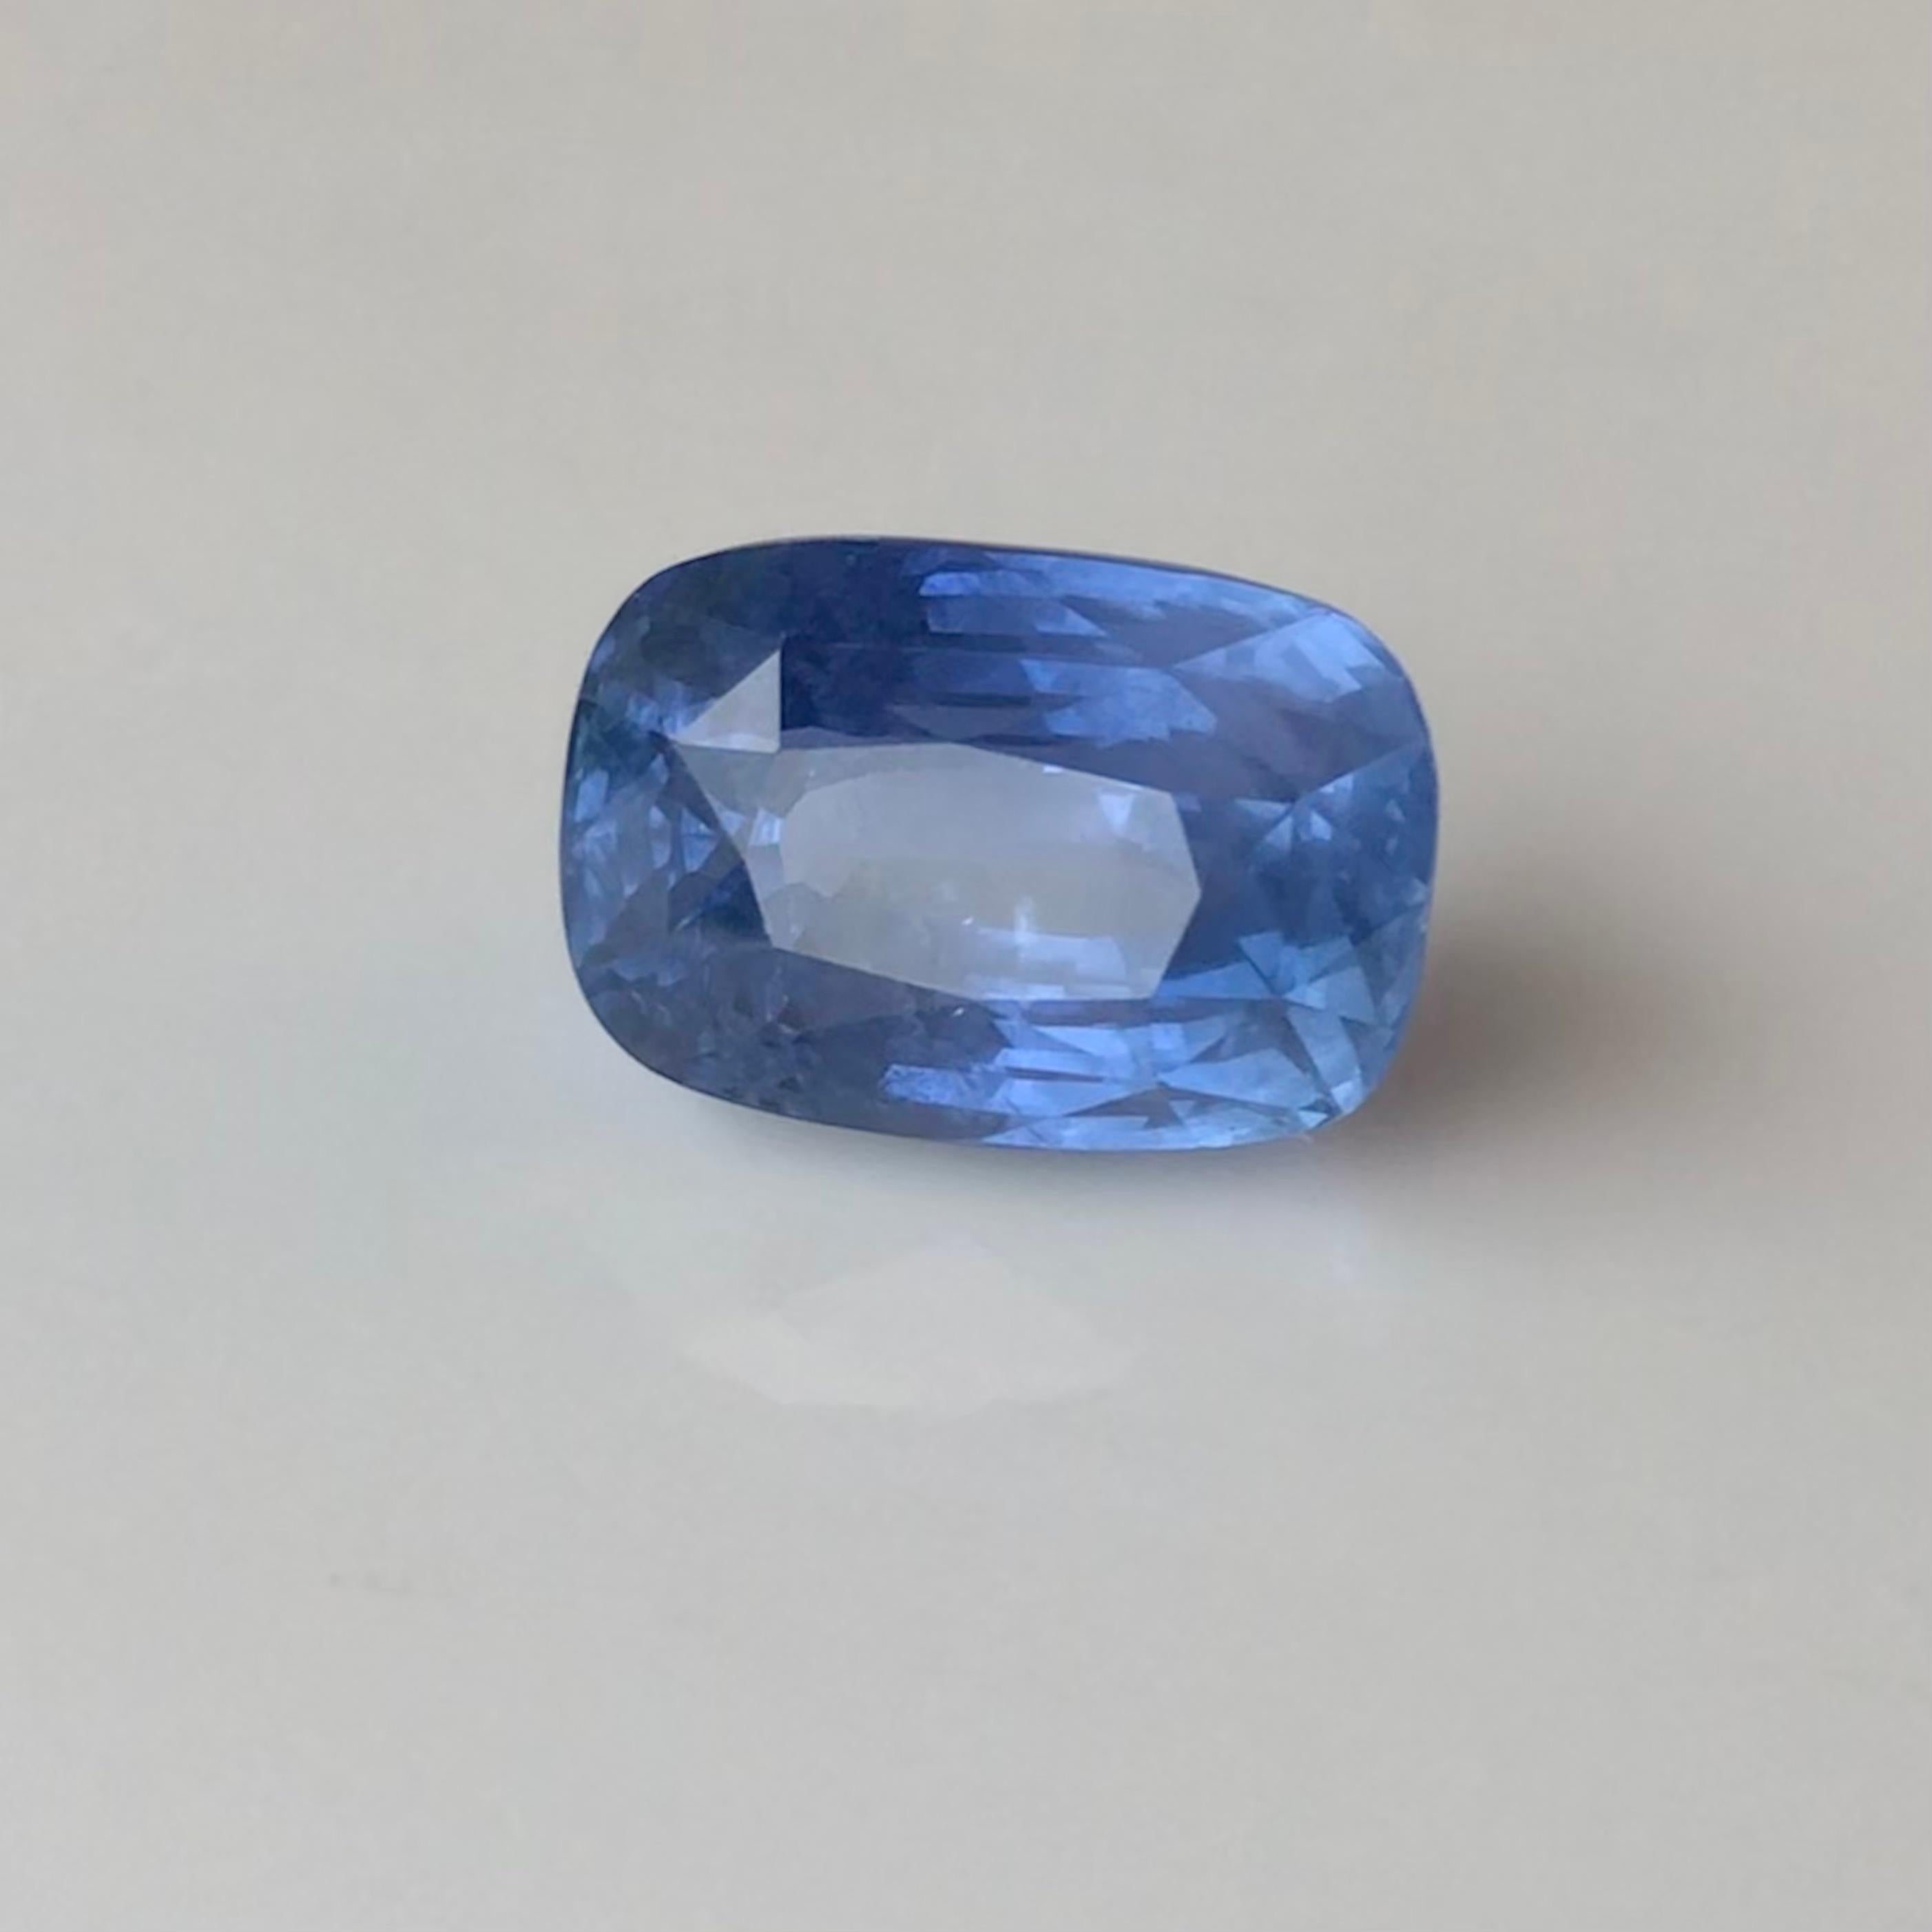 Saphir bleu de Ceylan non chauffé 13,12 carats, pierre précieuse non sertie, coussin certifié en vente 1